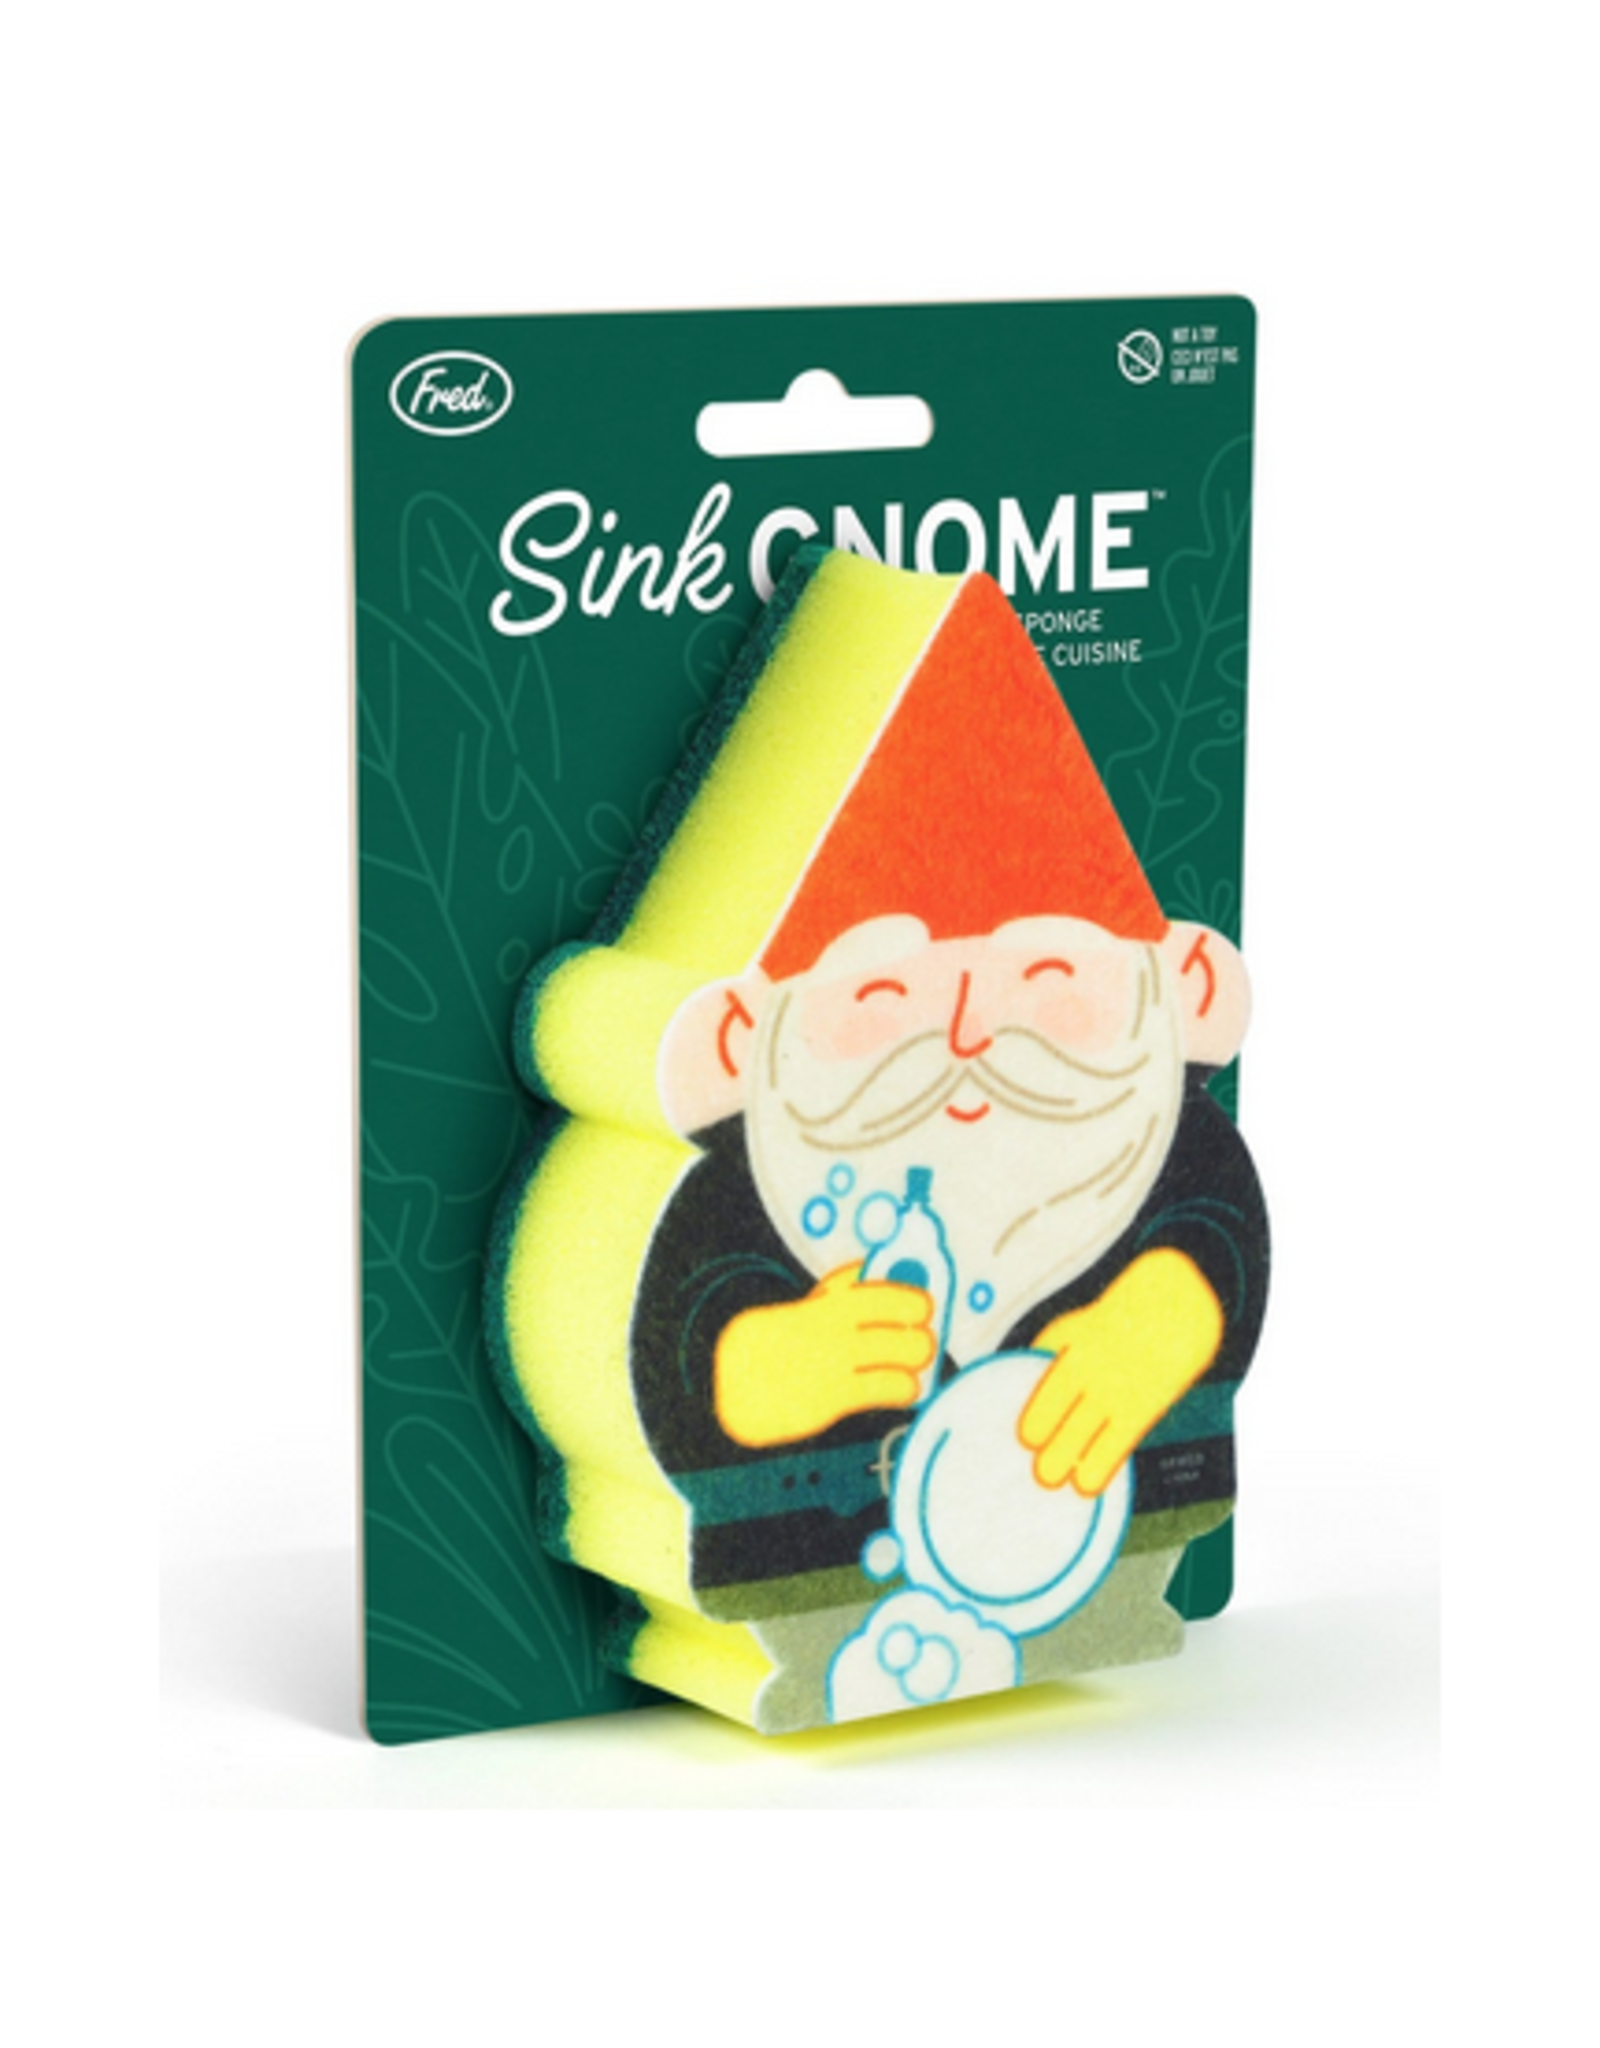 Gnome Sponge